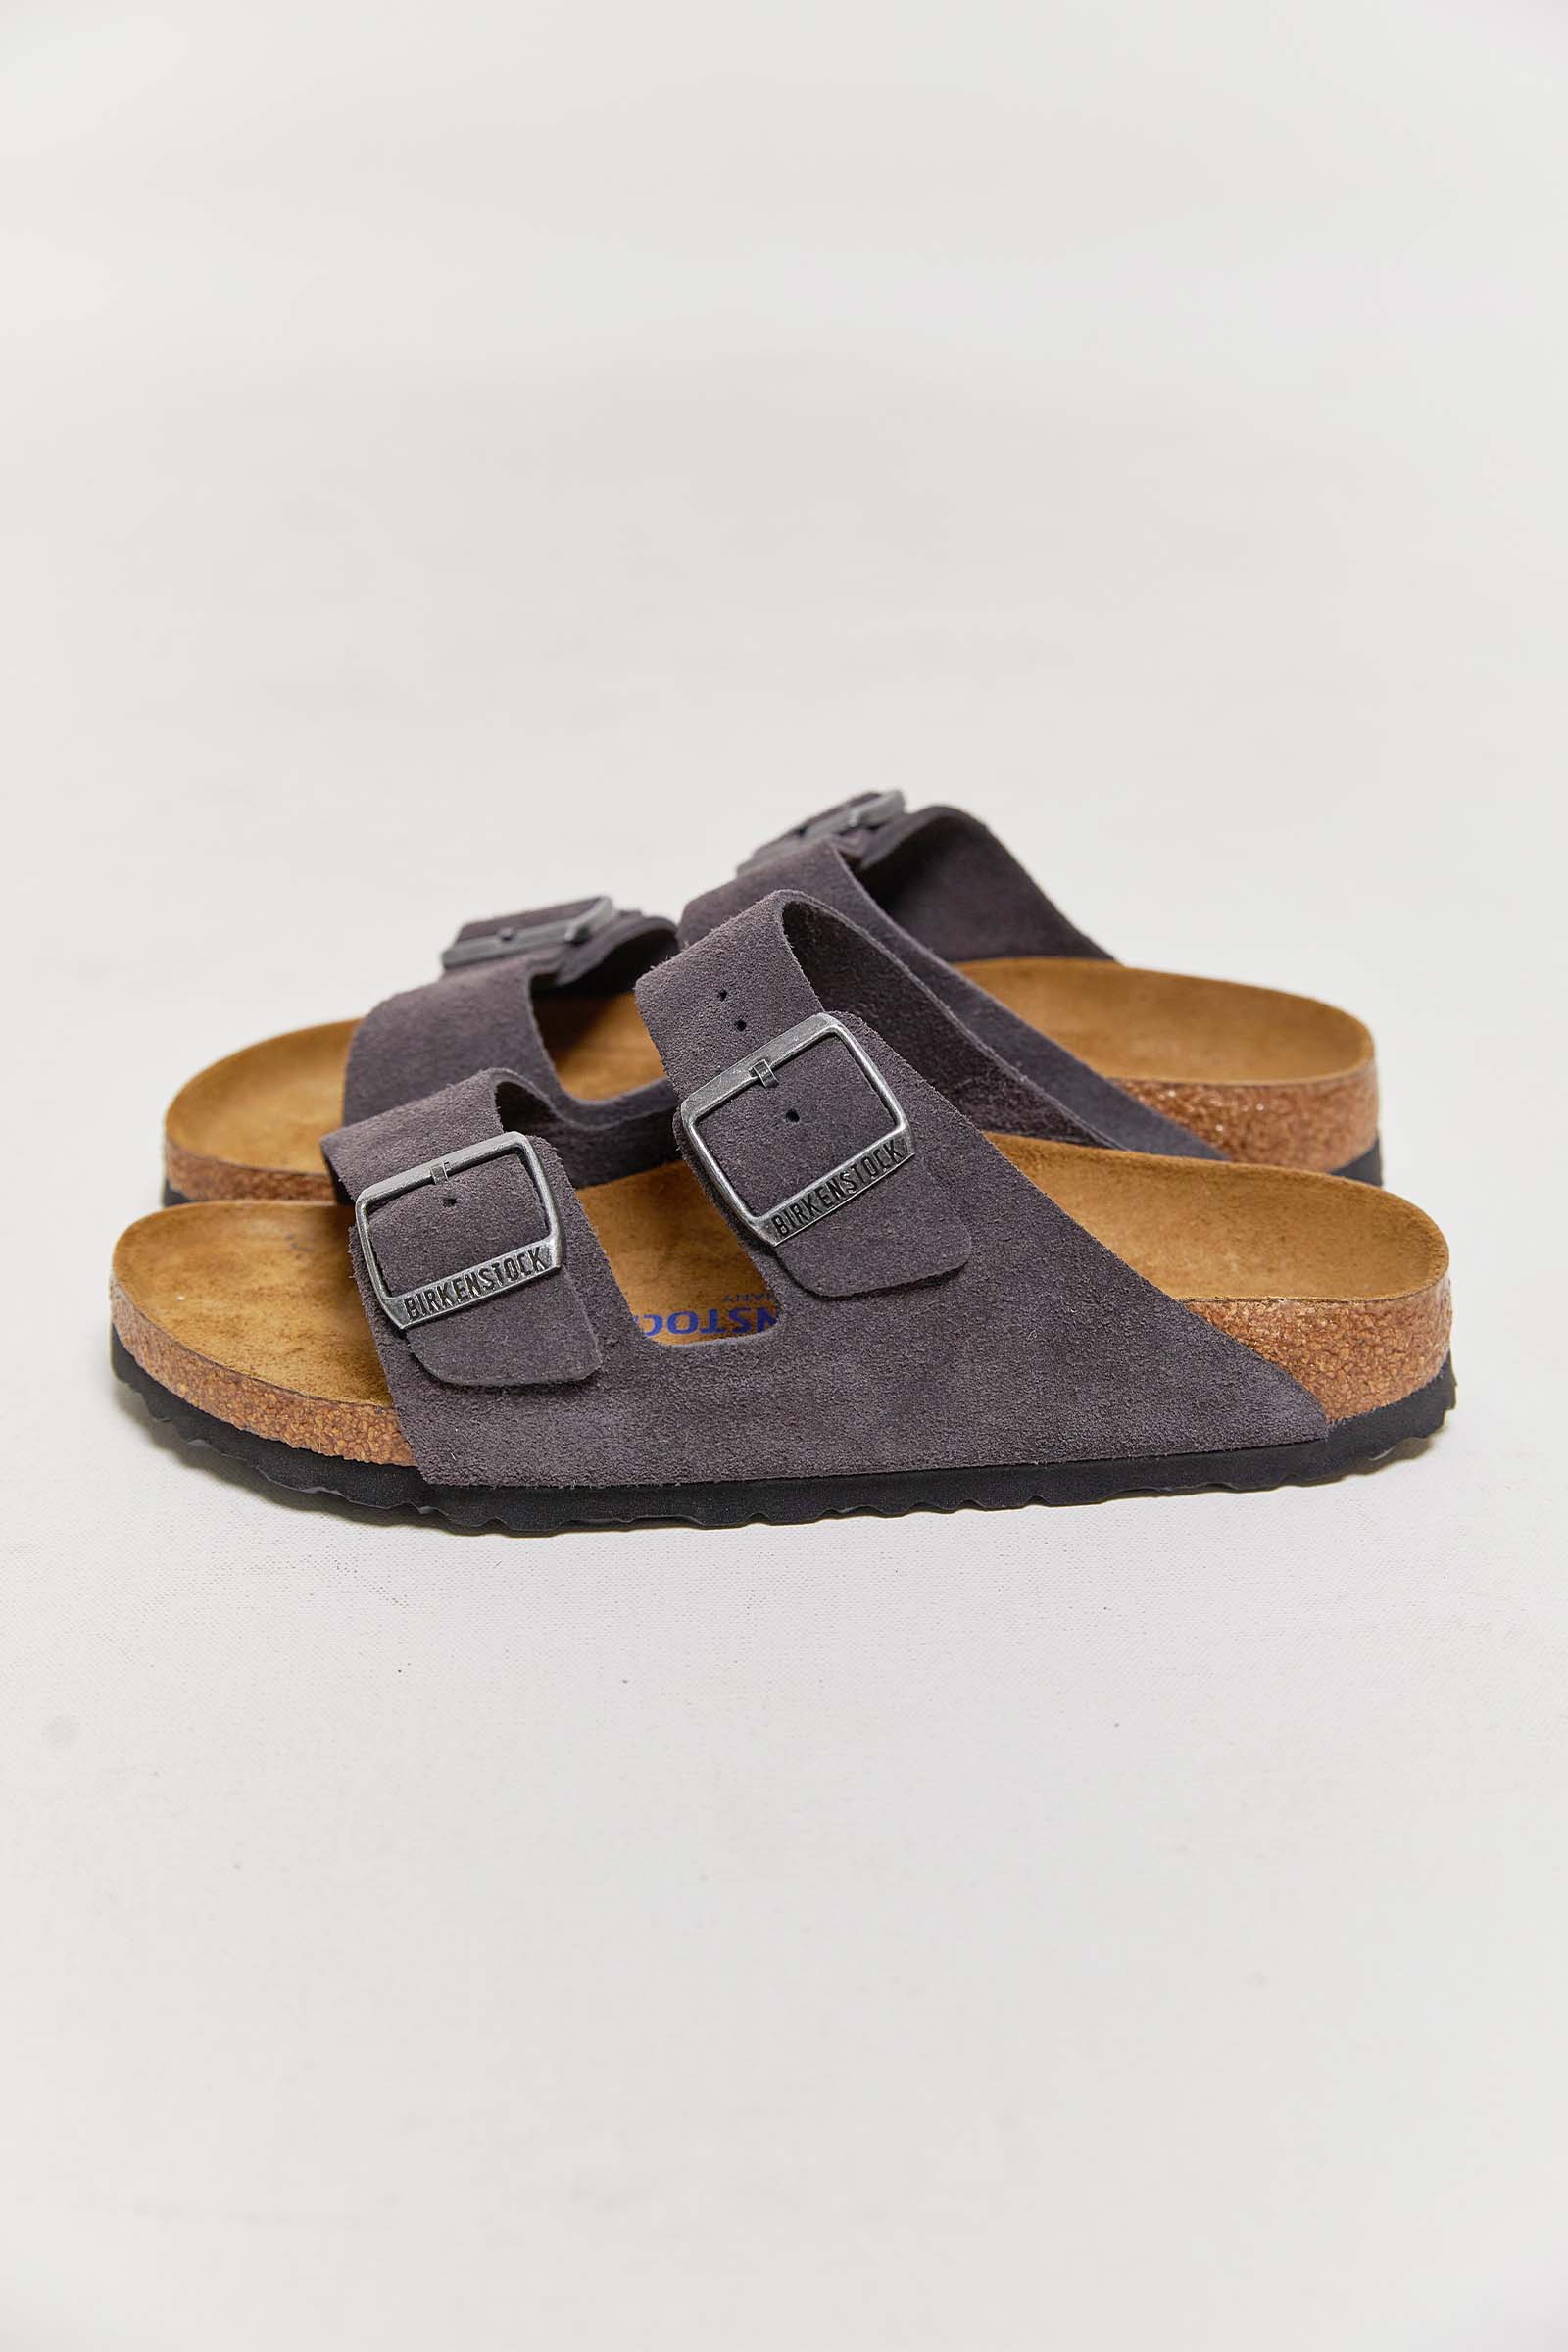 birkenstock arizona velvet grey sandal.